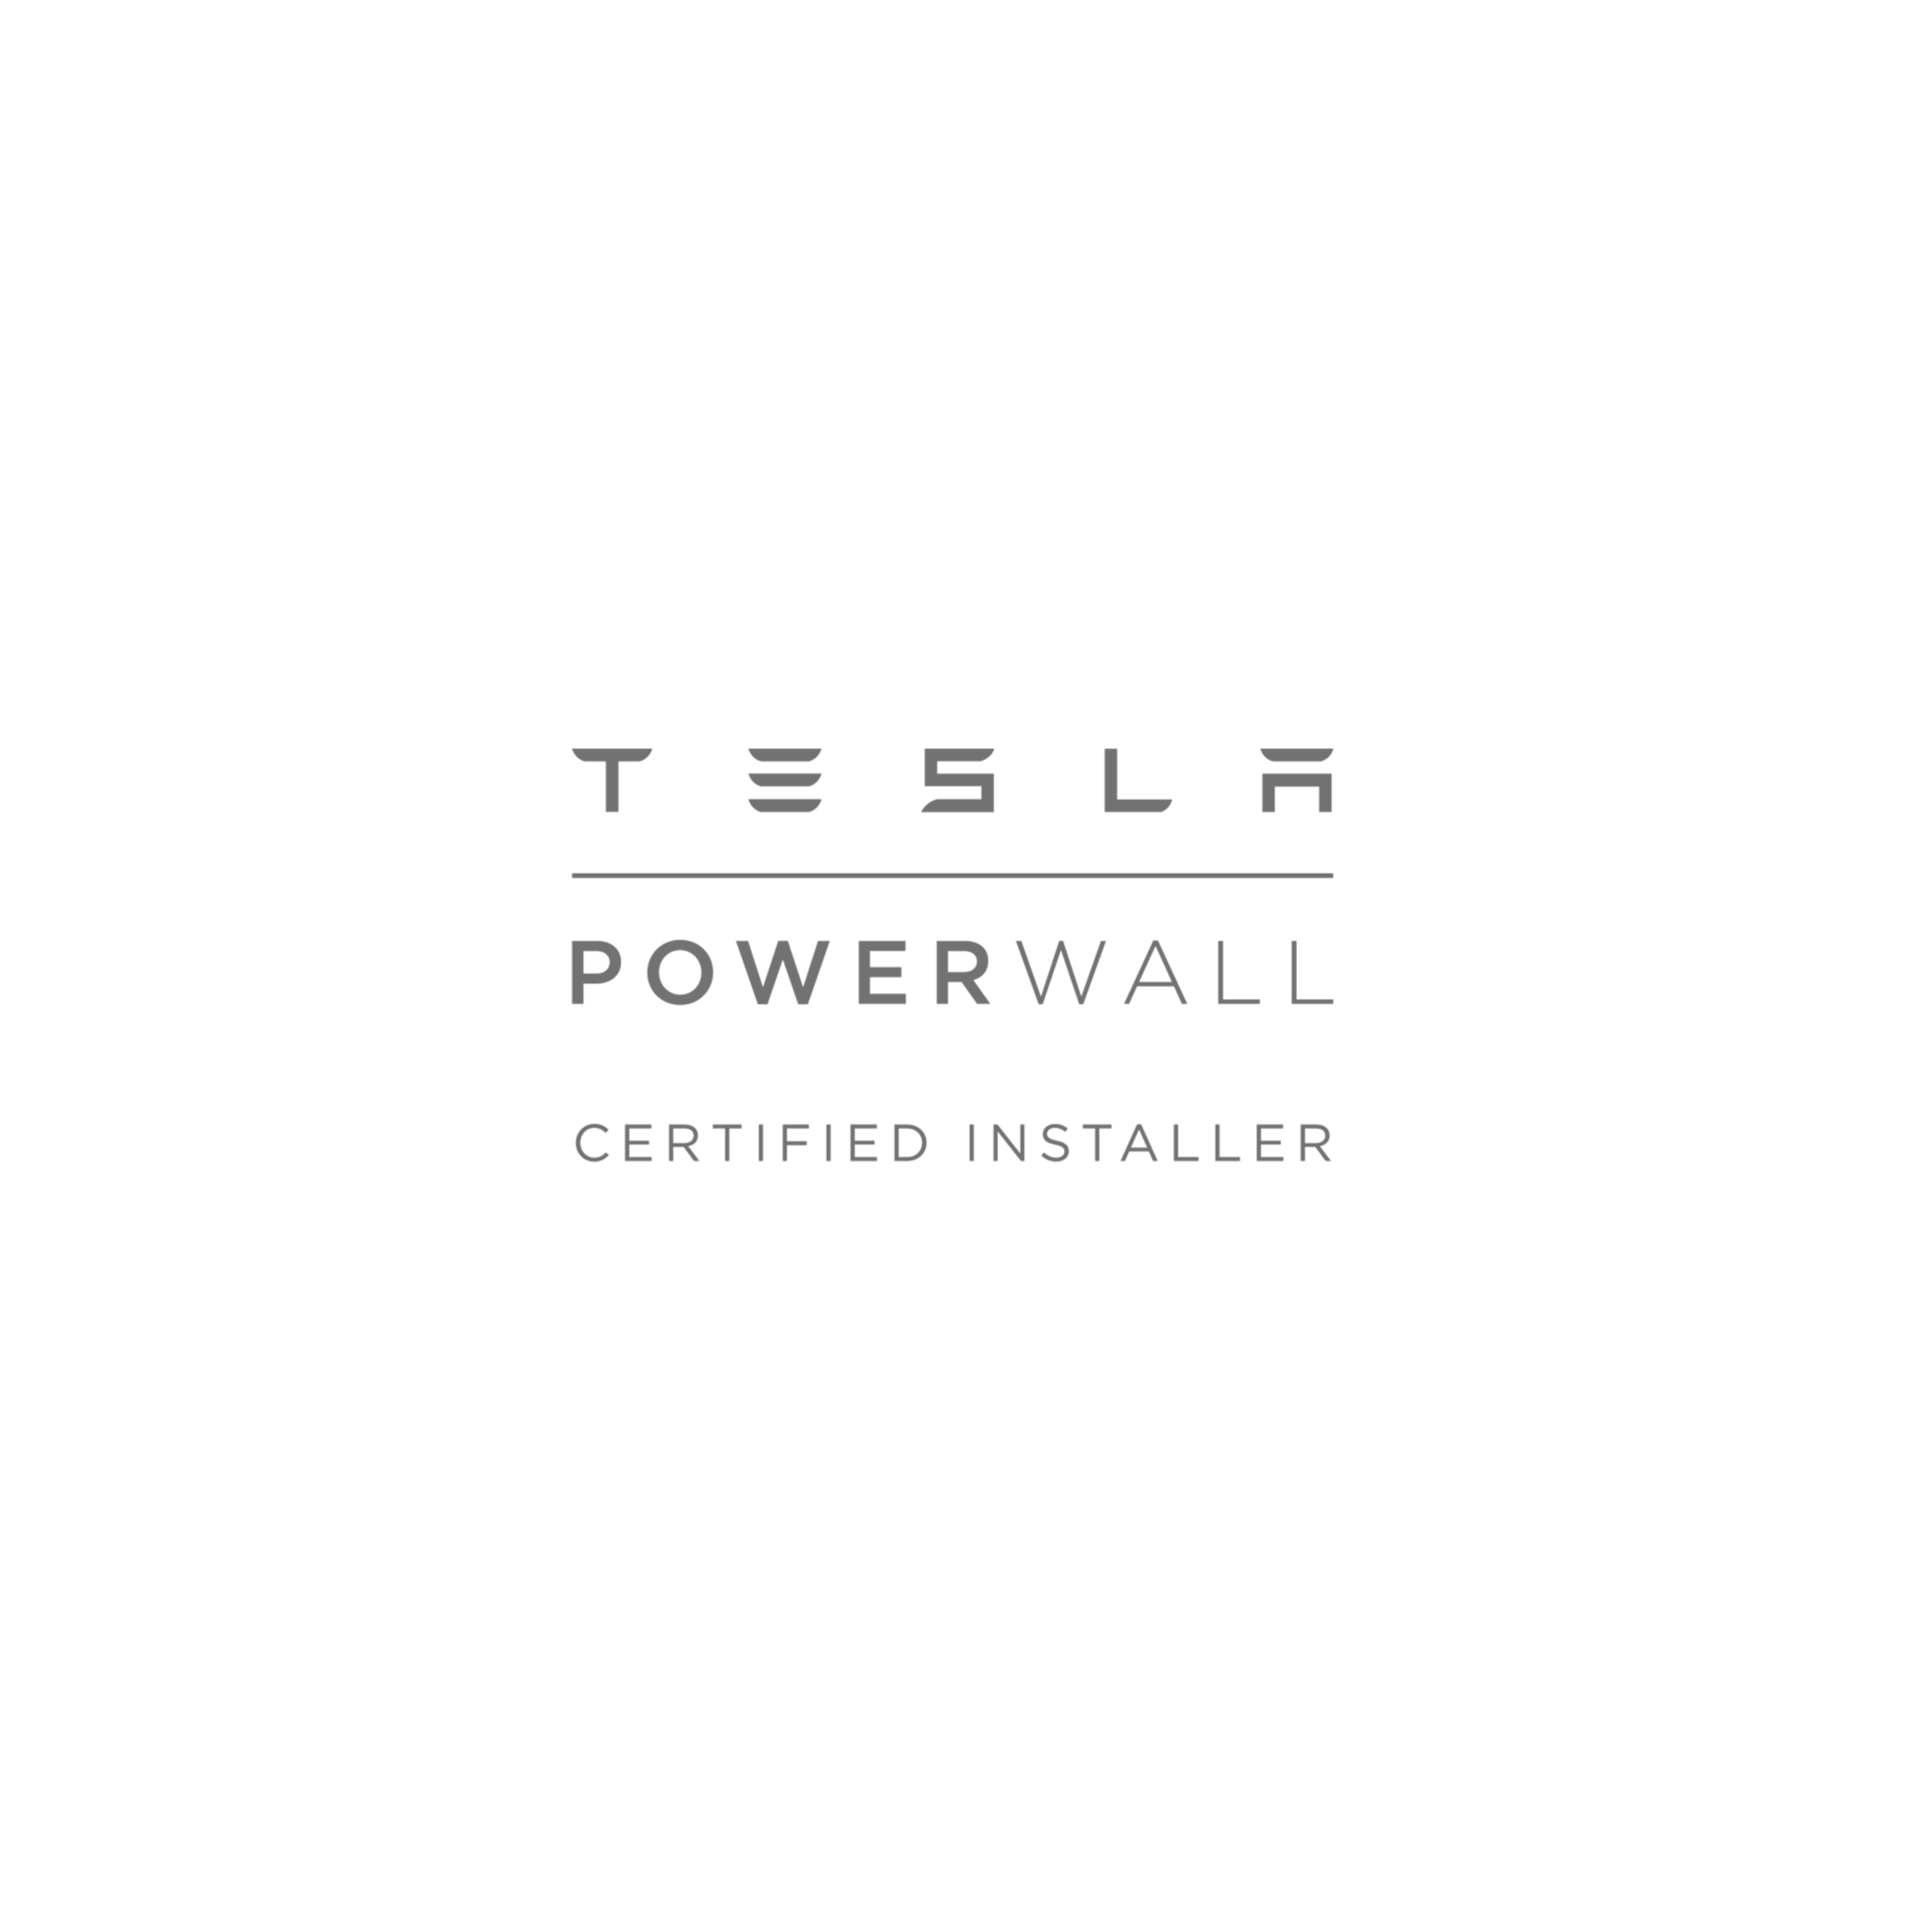 The tesla powerwall logo is a certified installer.